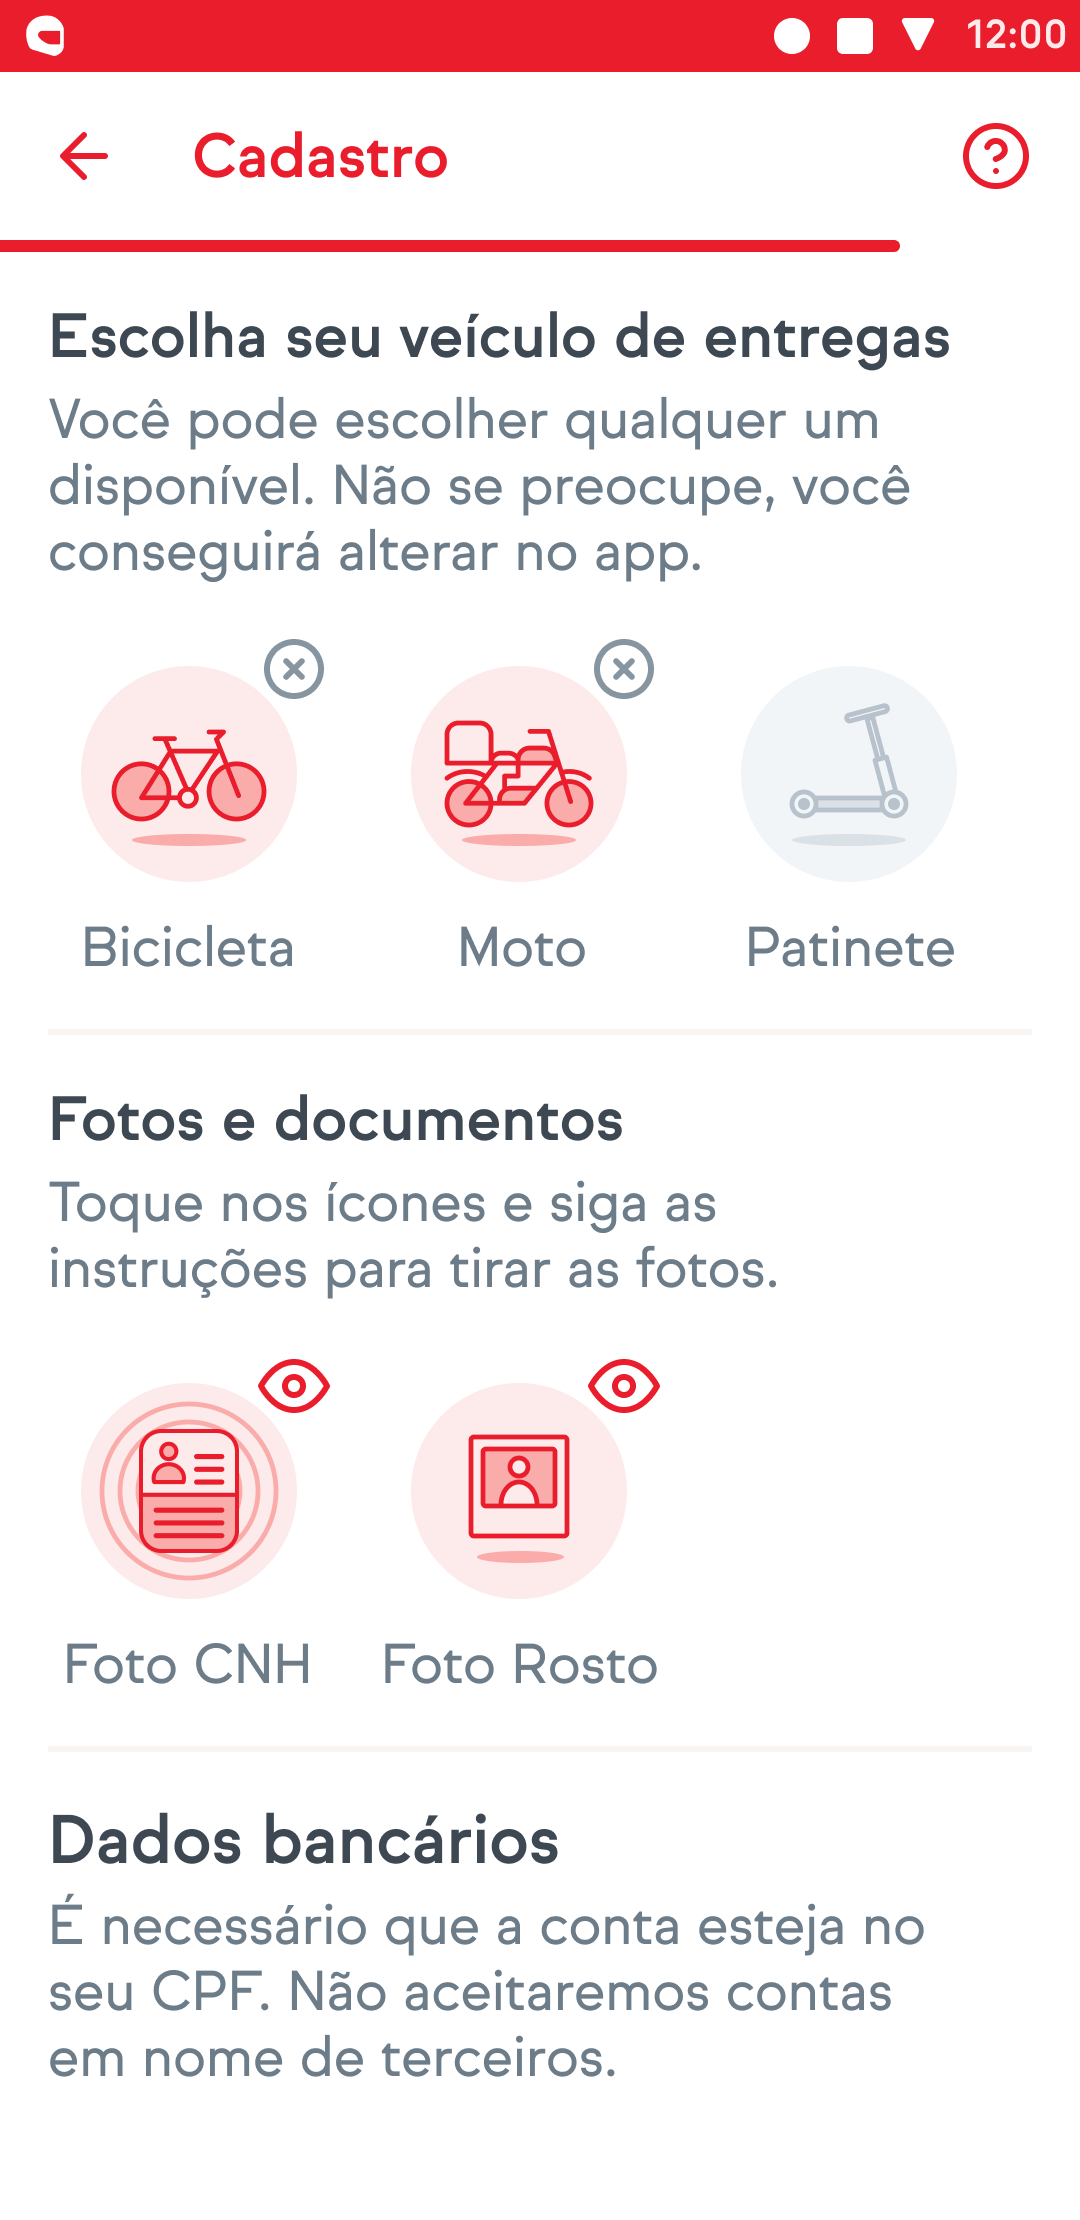 Screenshots of iFood's driver app